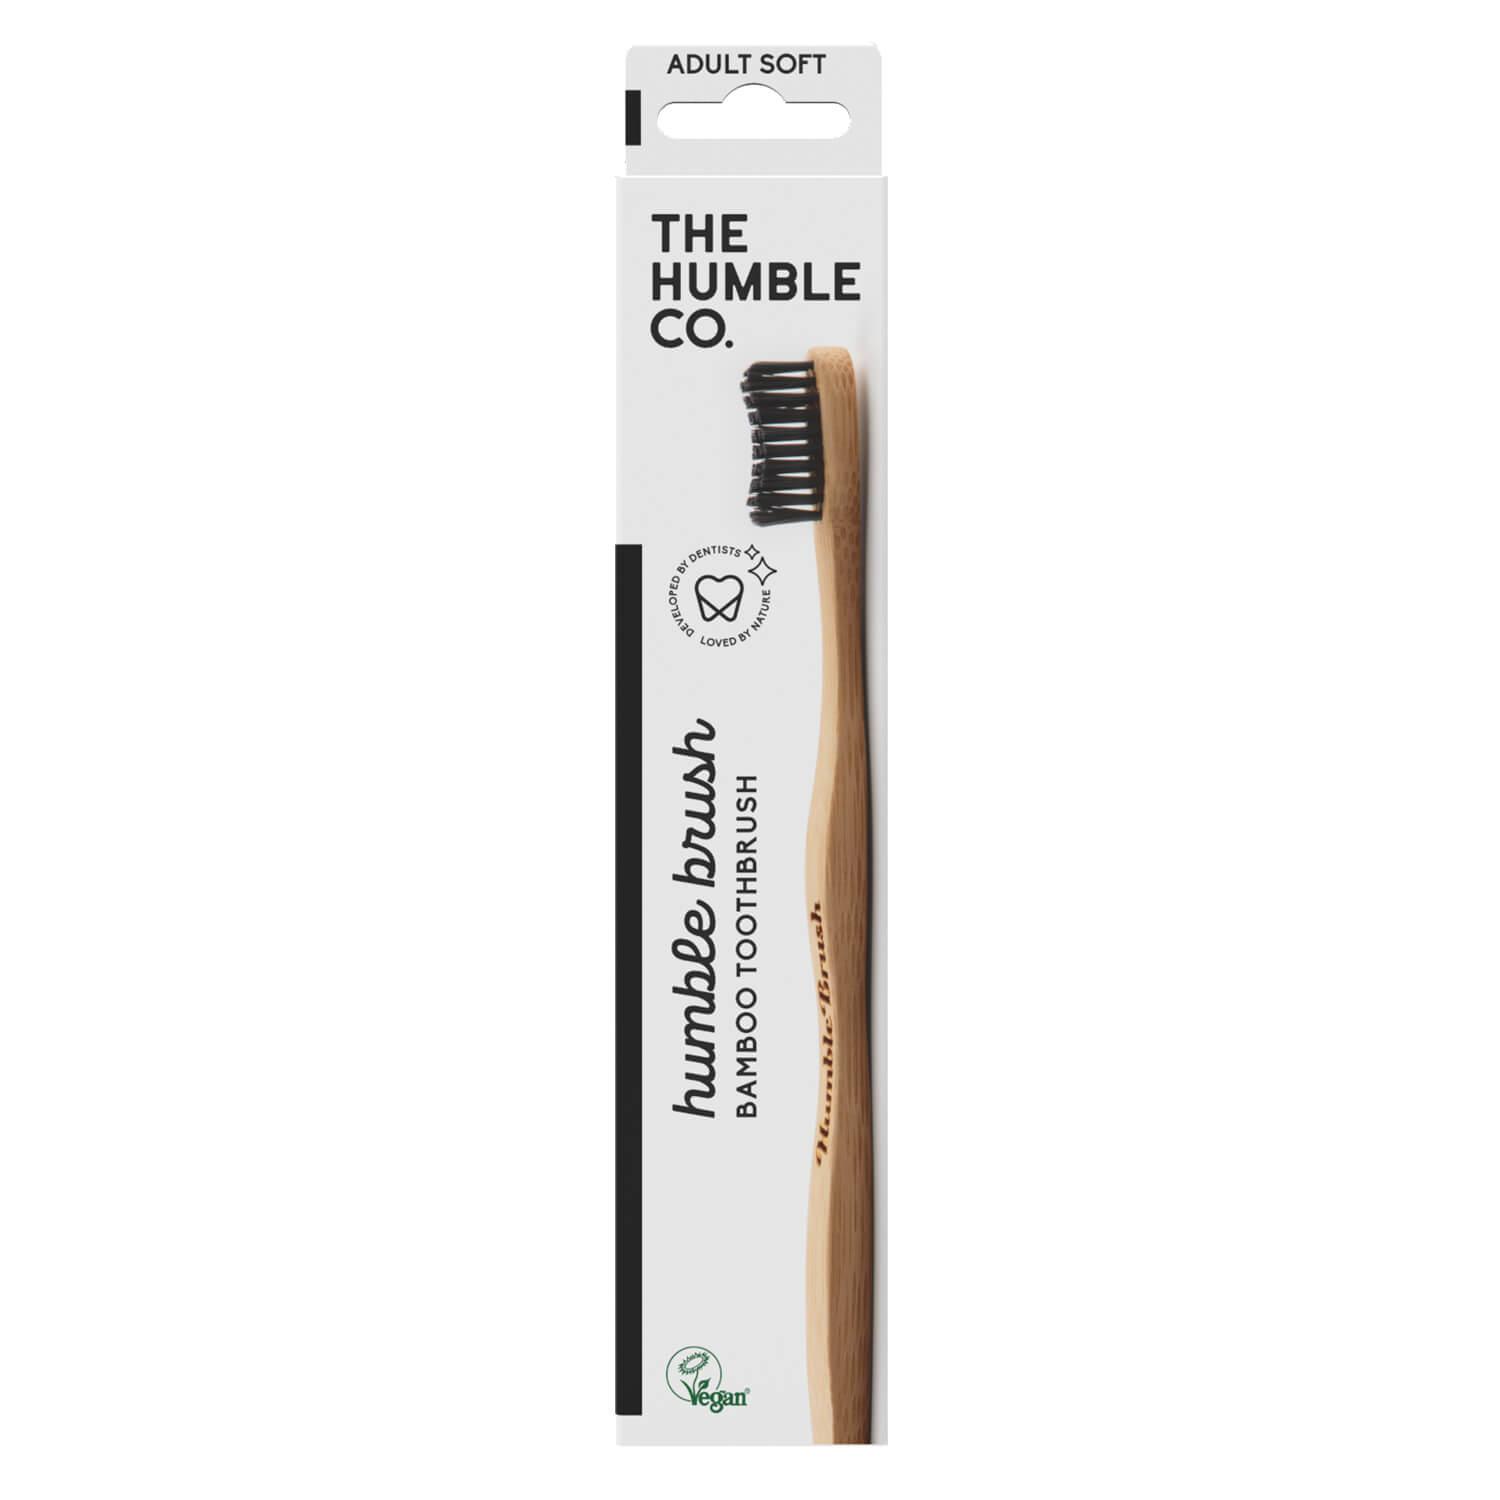 THE HUMBLE CO. - Humble Brush Toothbrush Adults Black